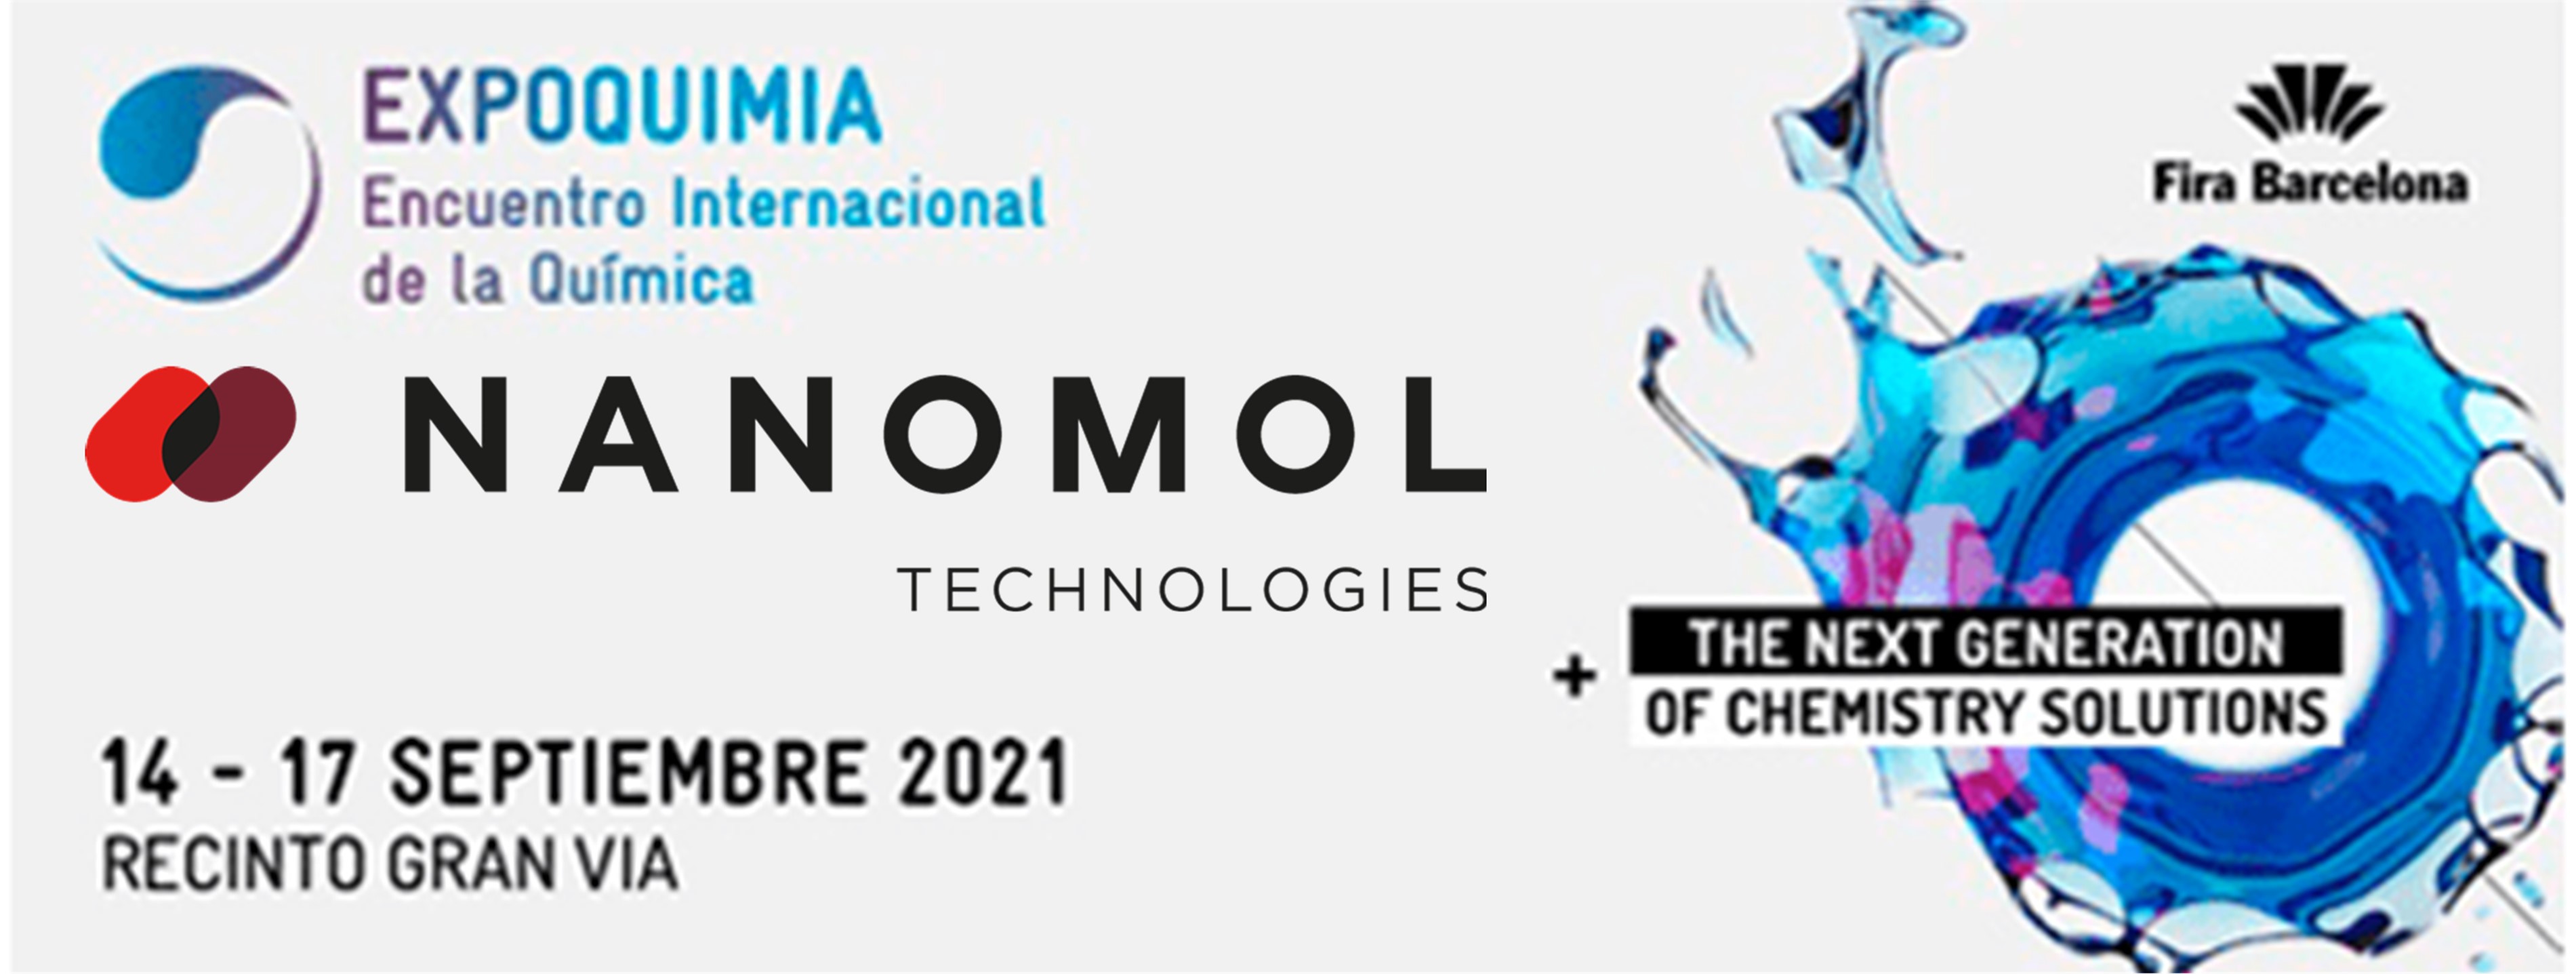 NANOMOL TECHNOLOGIES IS PRESENT AT EXPOQUIMIA 2021